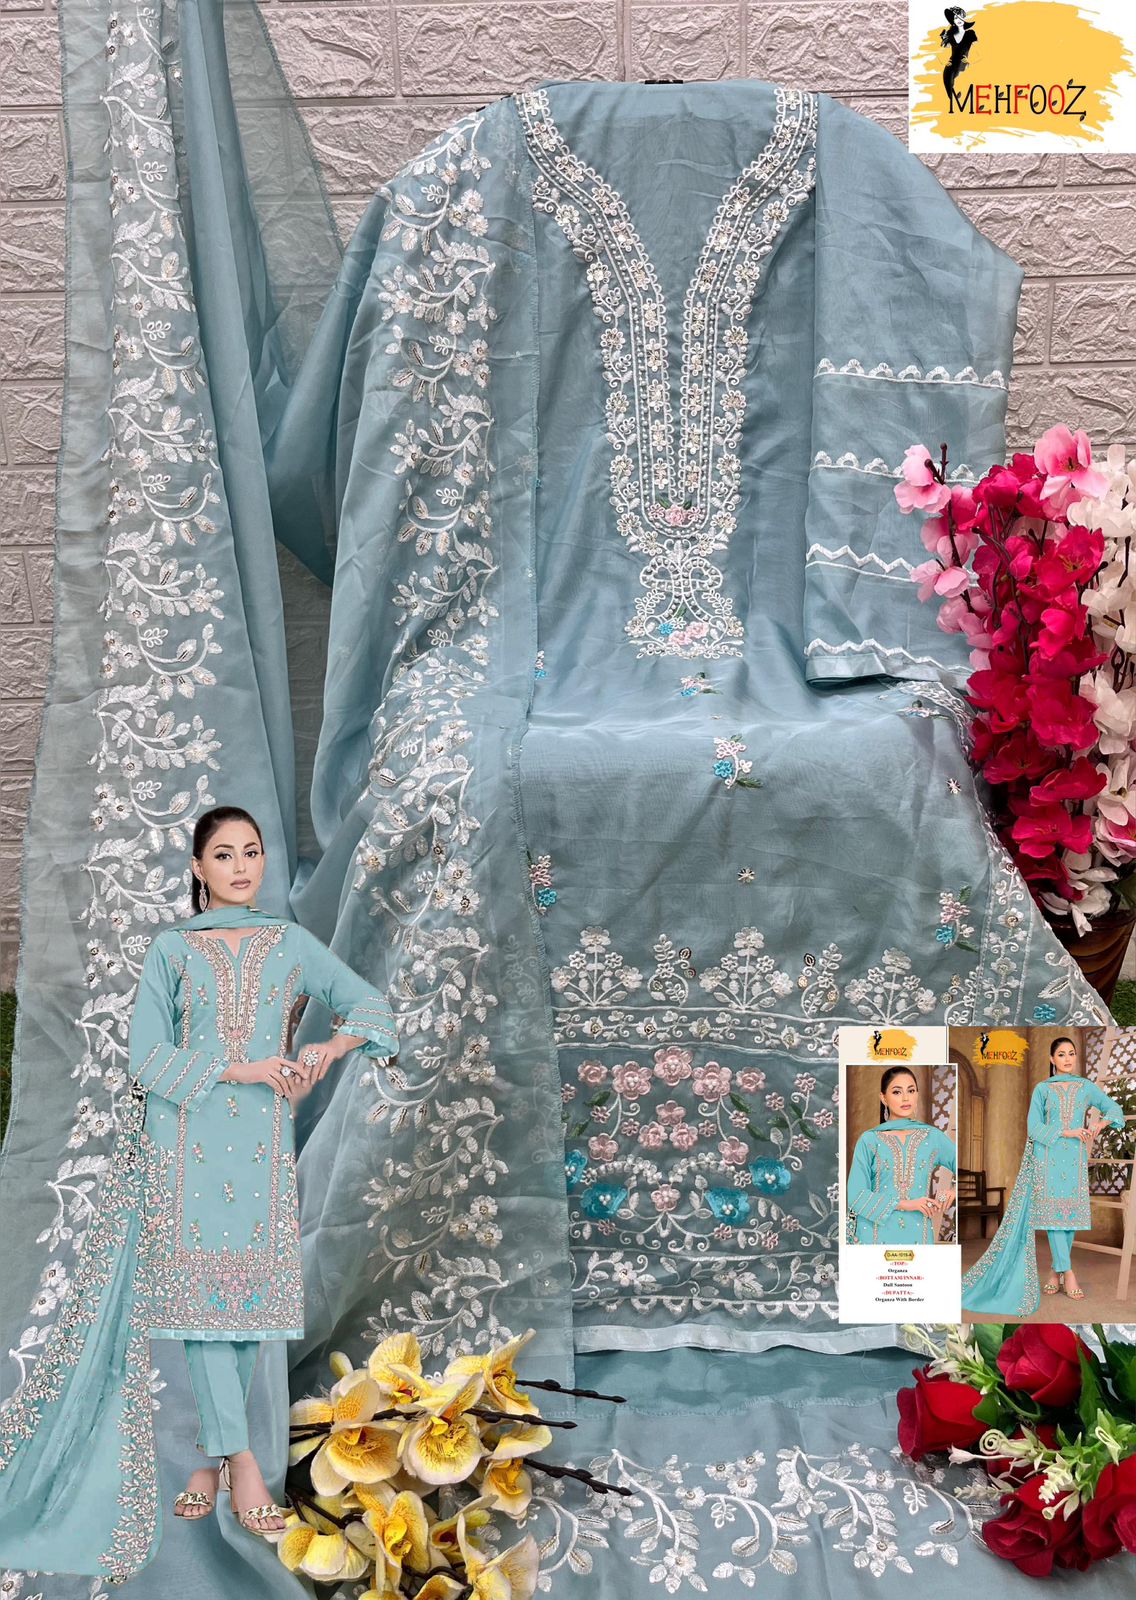 Mehfooz D.no AA 1019 Organza With Moti Work Pakistani Suits Manufacturer In Surat - jilaniwholesalesuit